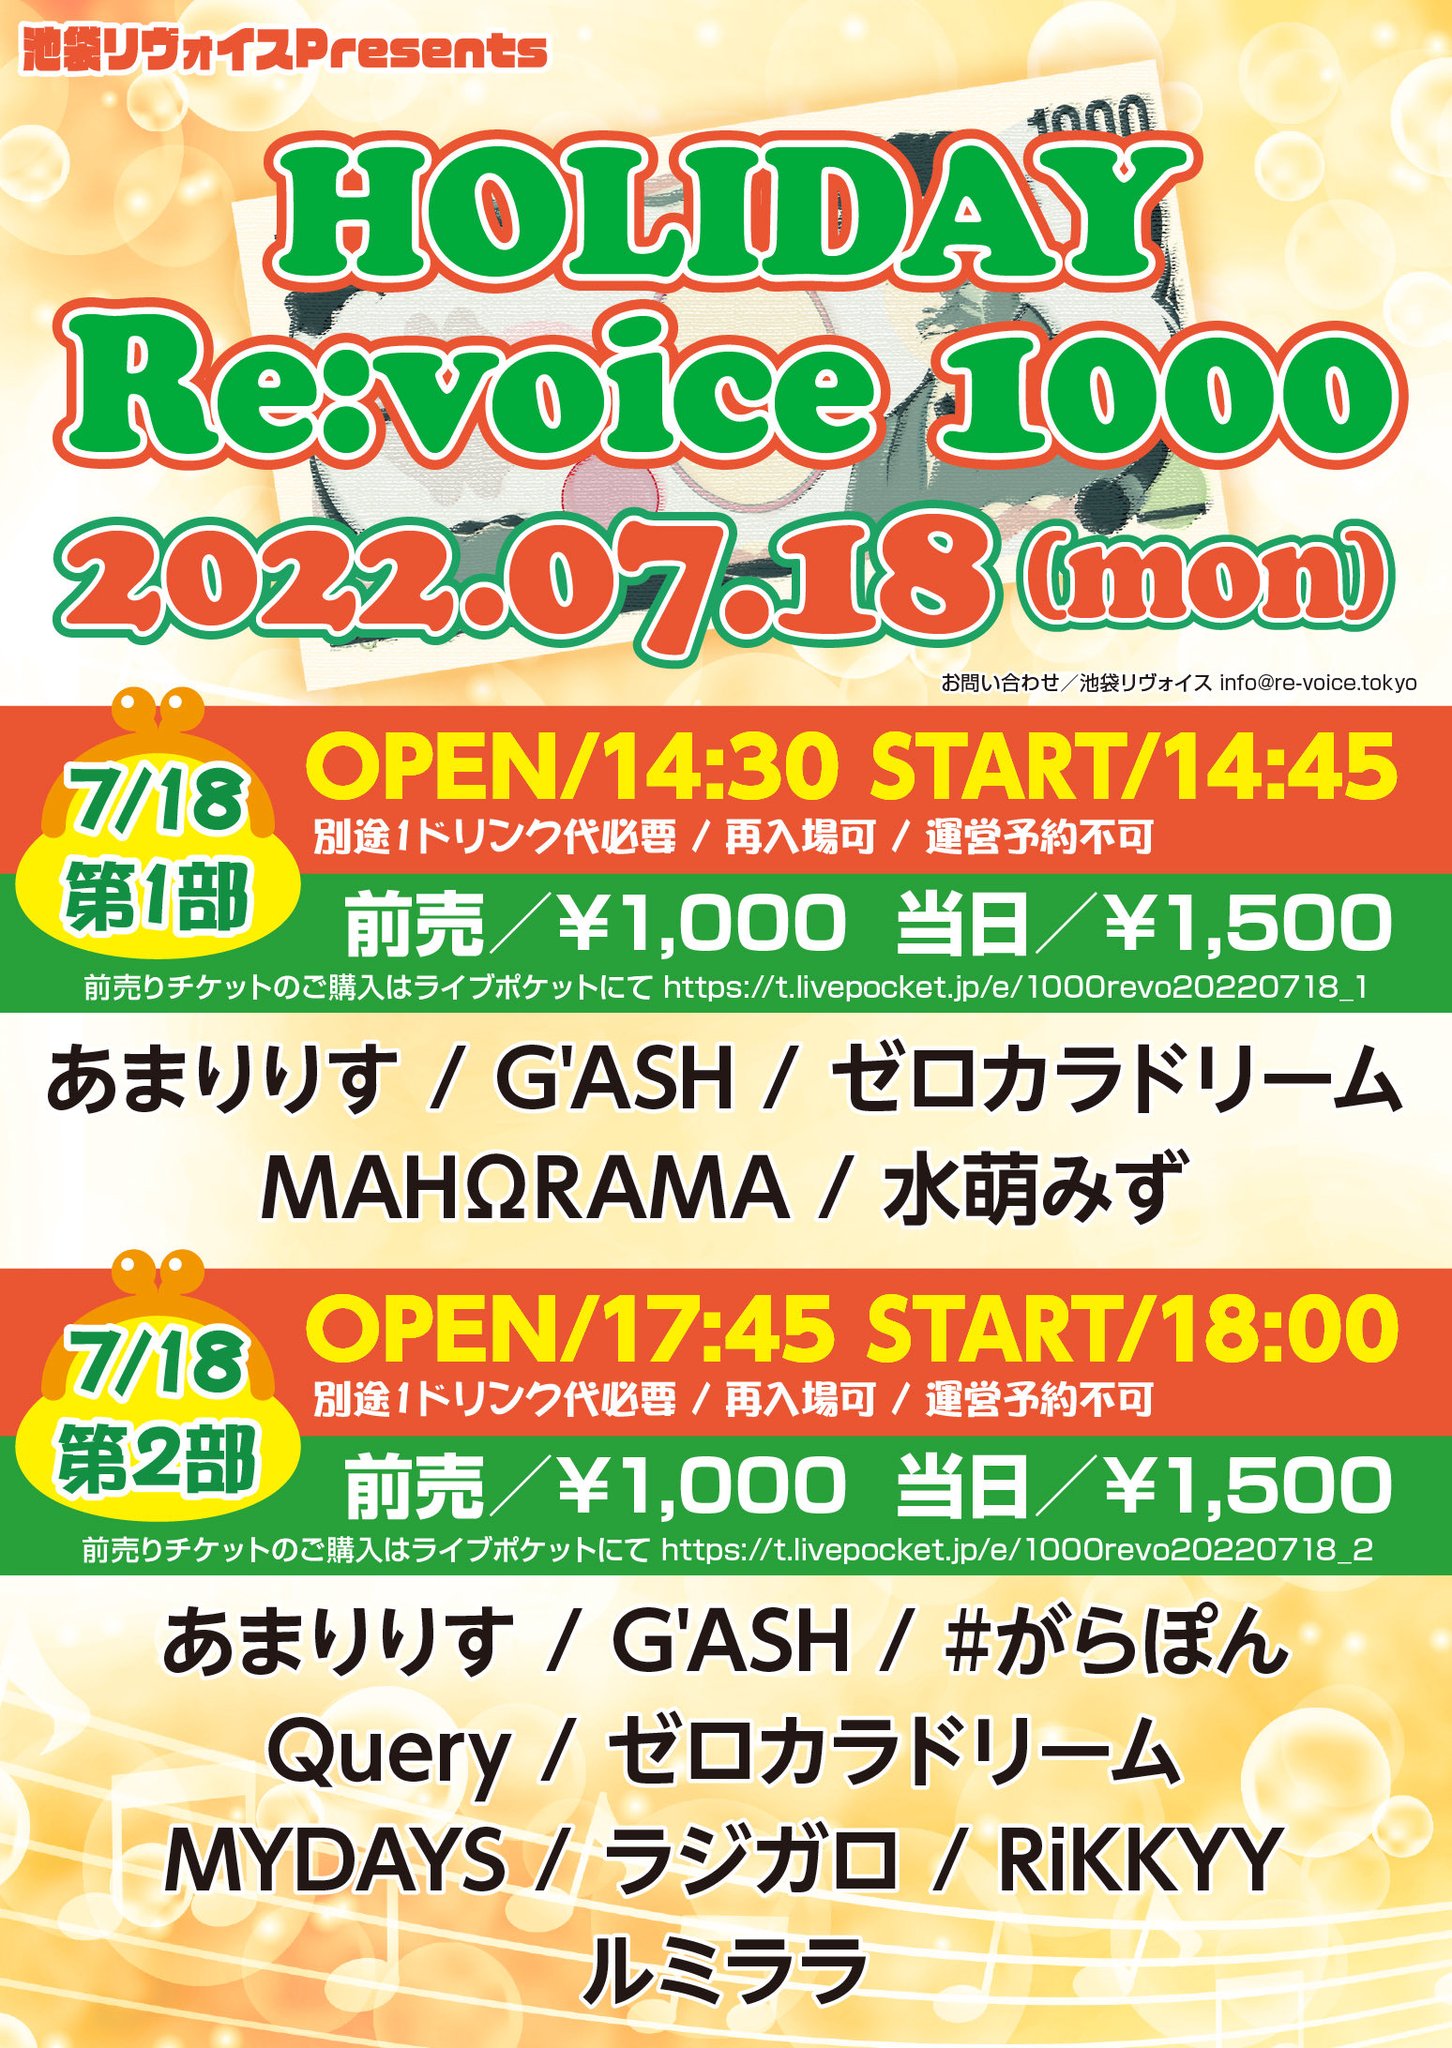 【第一部】HOLIDAY Re:voice 1000